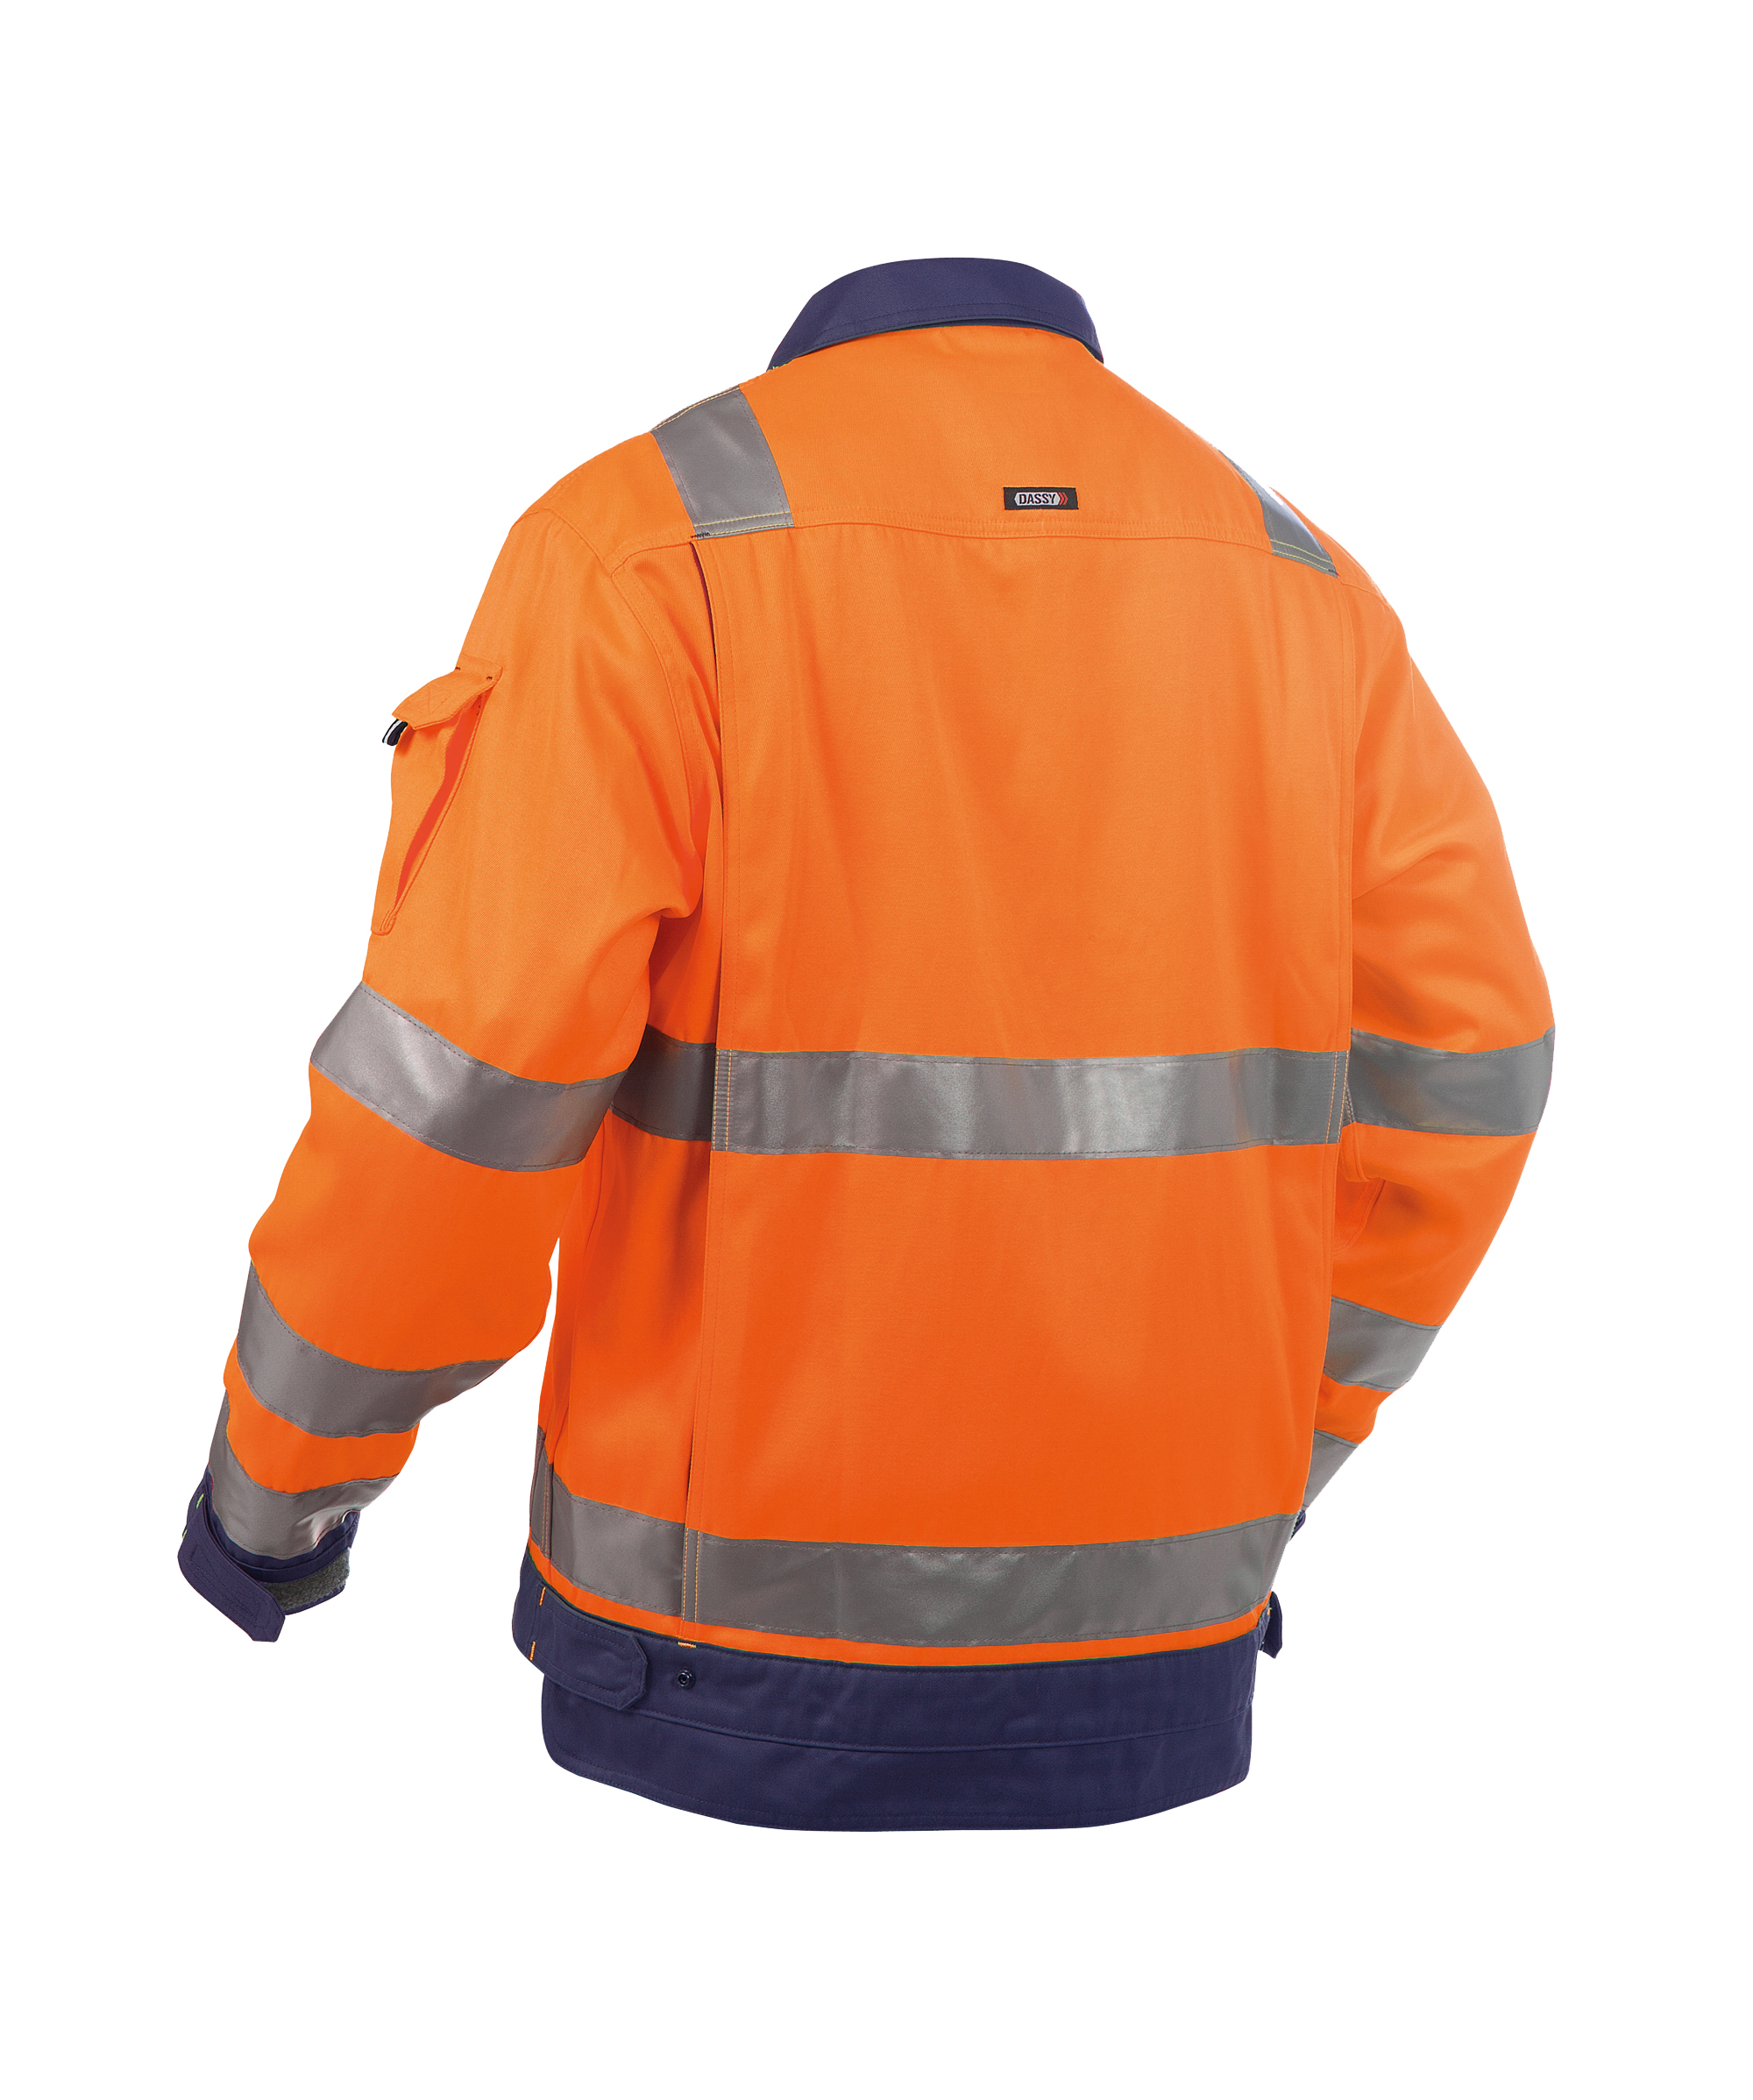 dusseldorf_high-visibility-work-jacket_fluo-orange-navy_back.jpg